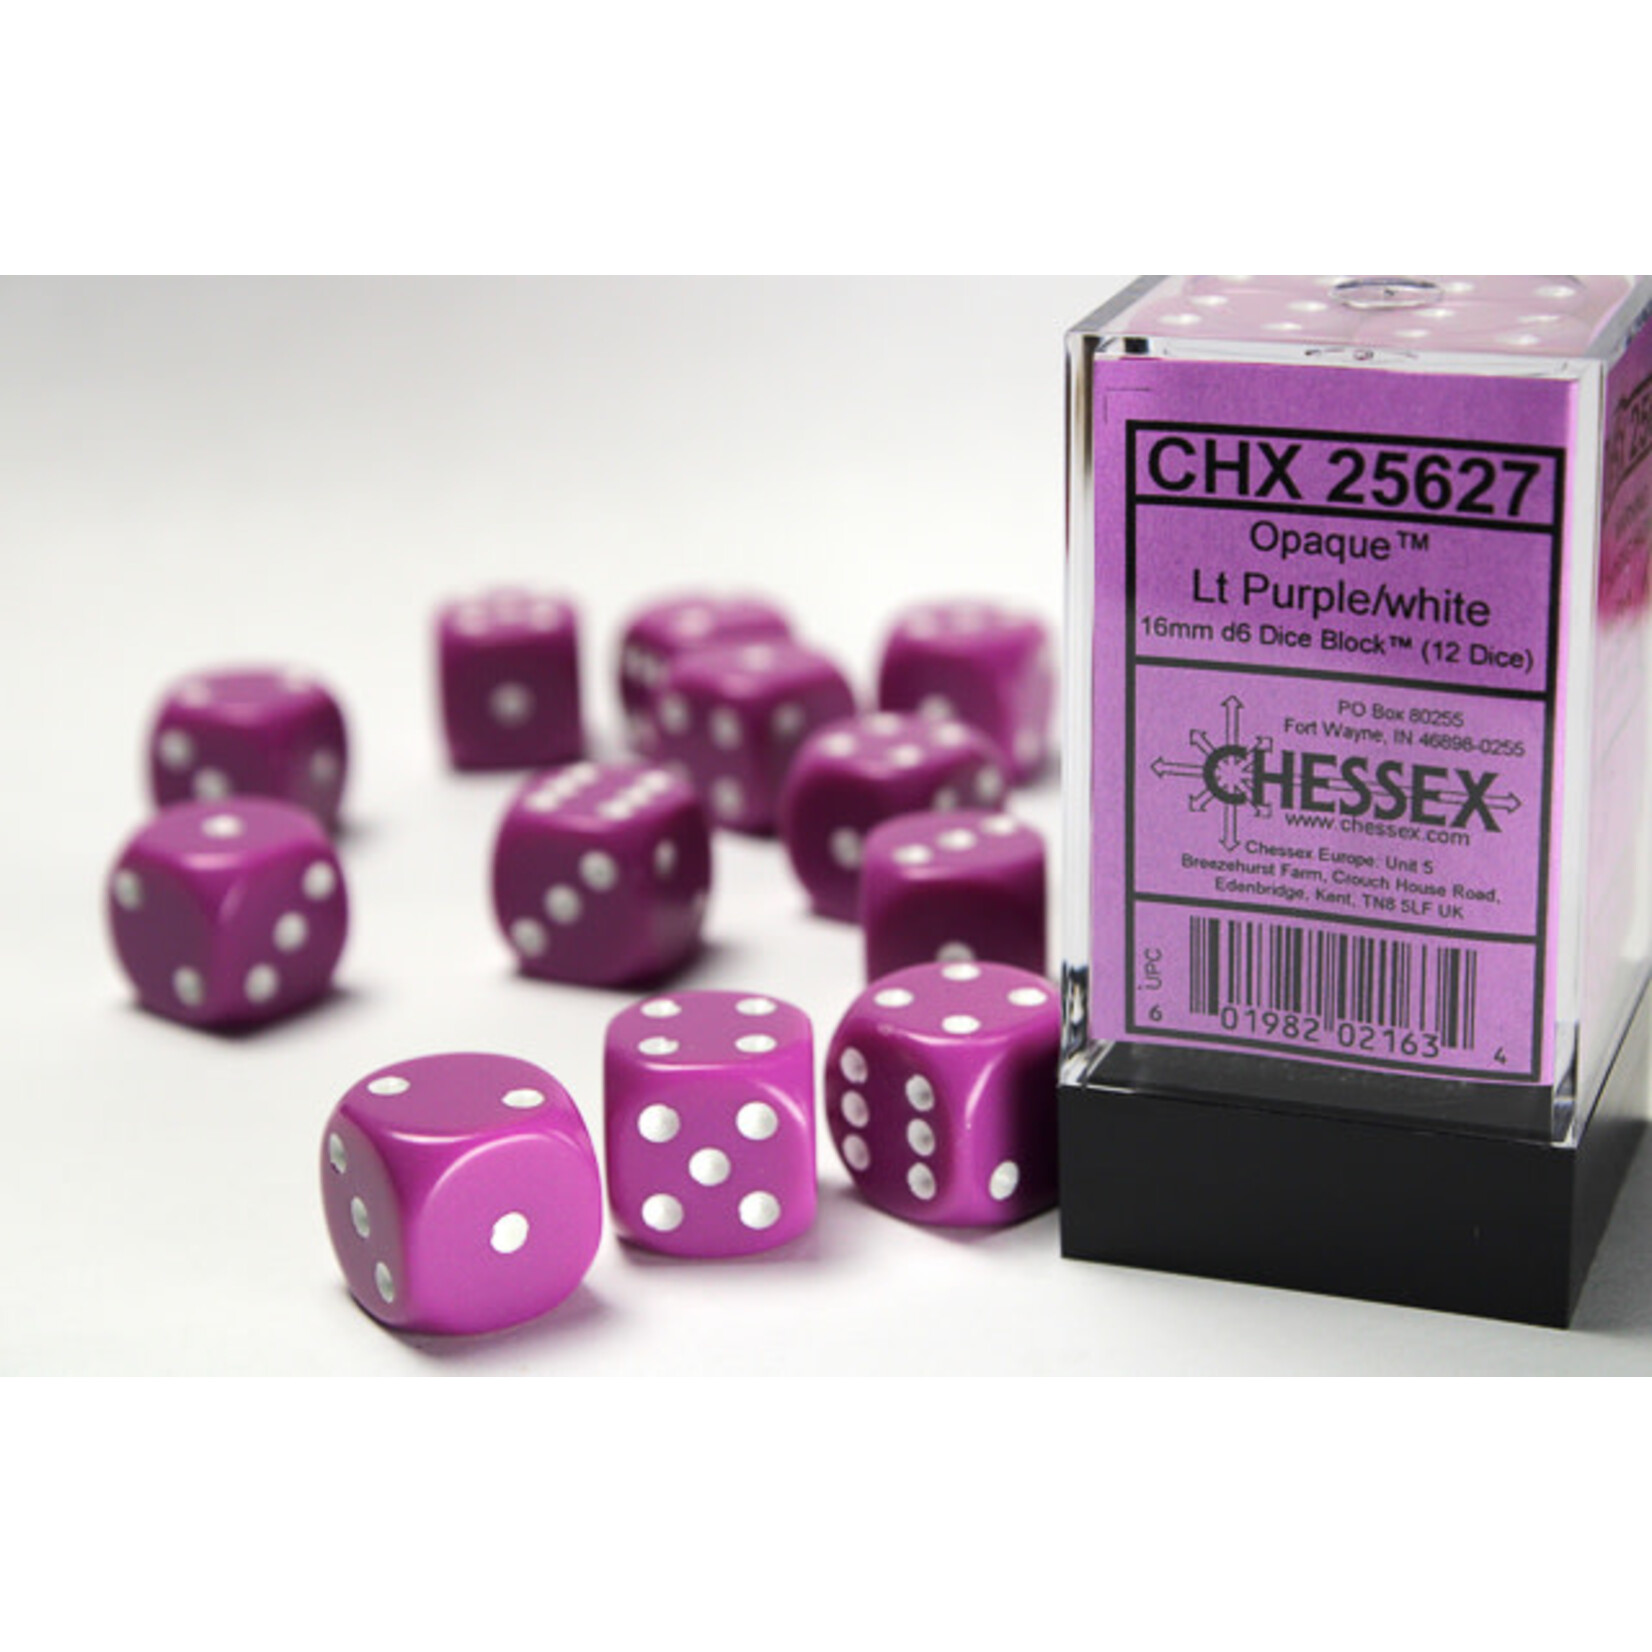 Chessex Opaque 16mm d6 Light Purple/white Dice Block™ (12 dice)